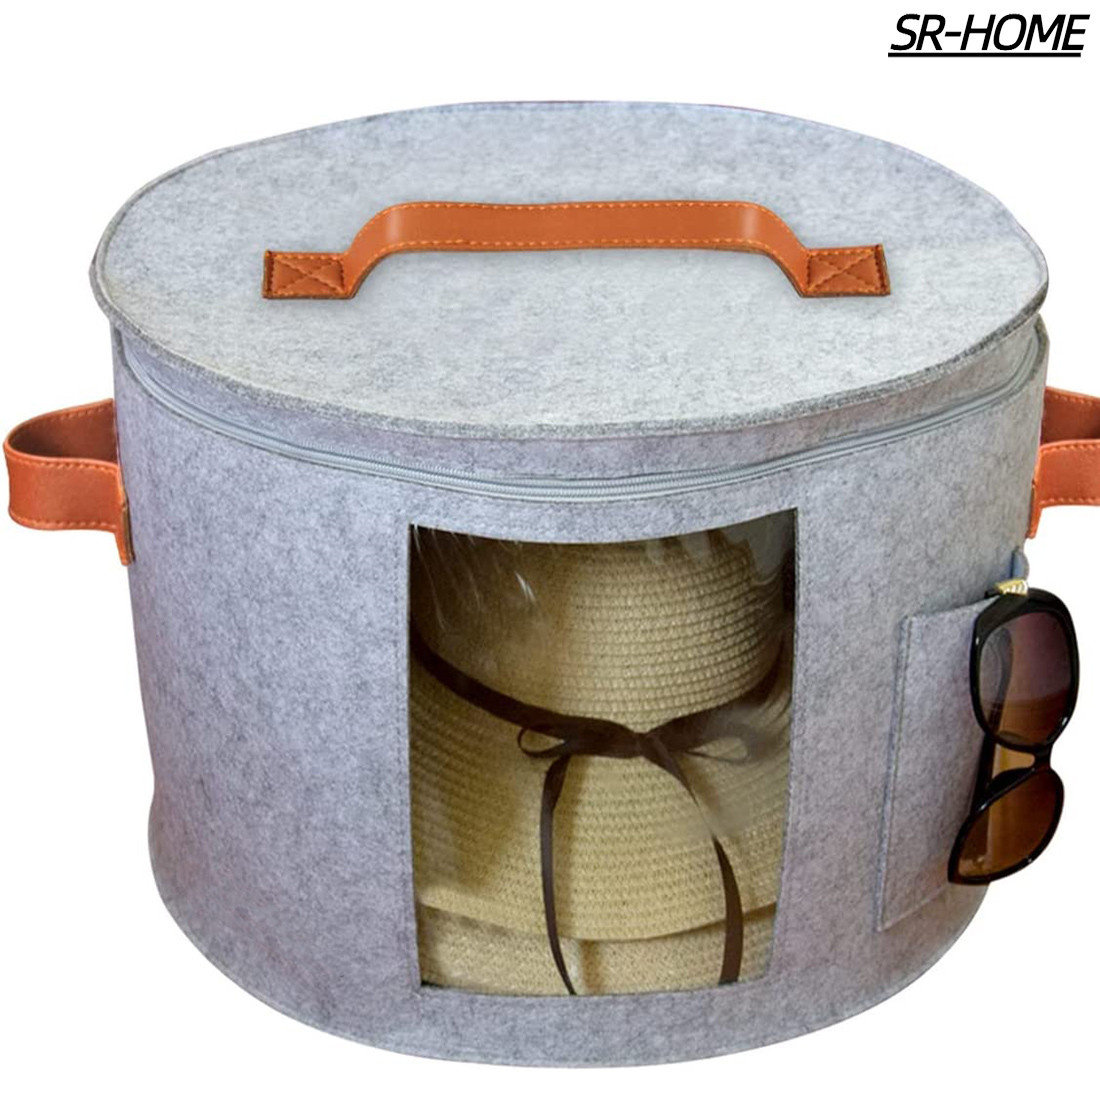 SR-HOME Hat Fabric Storage Basket